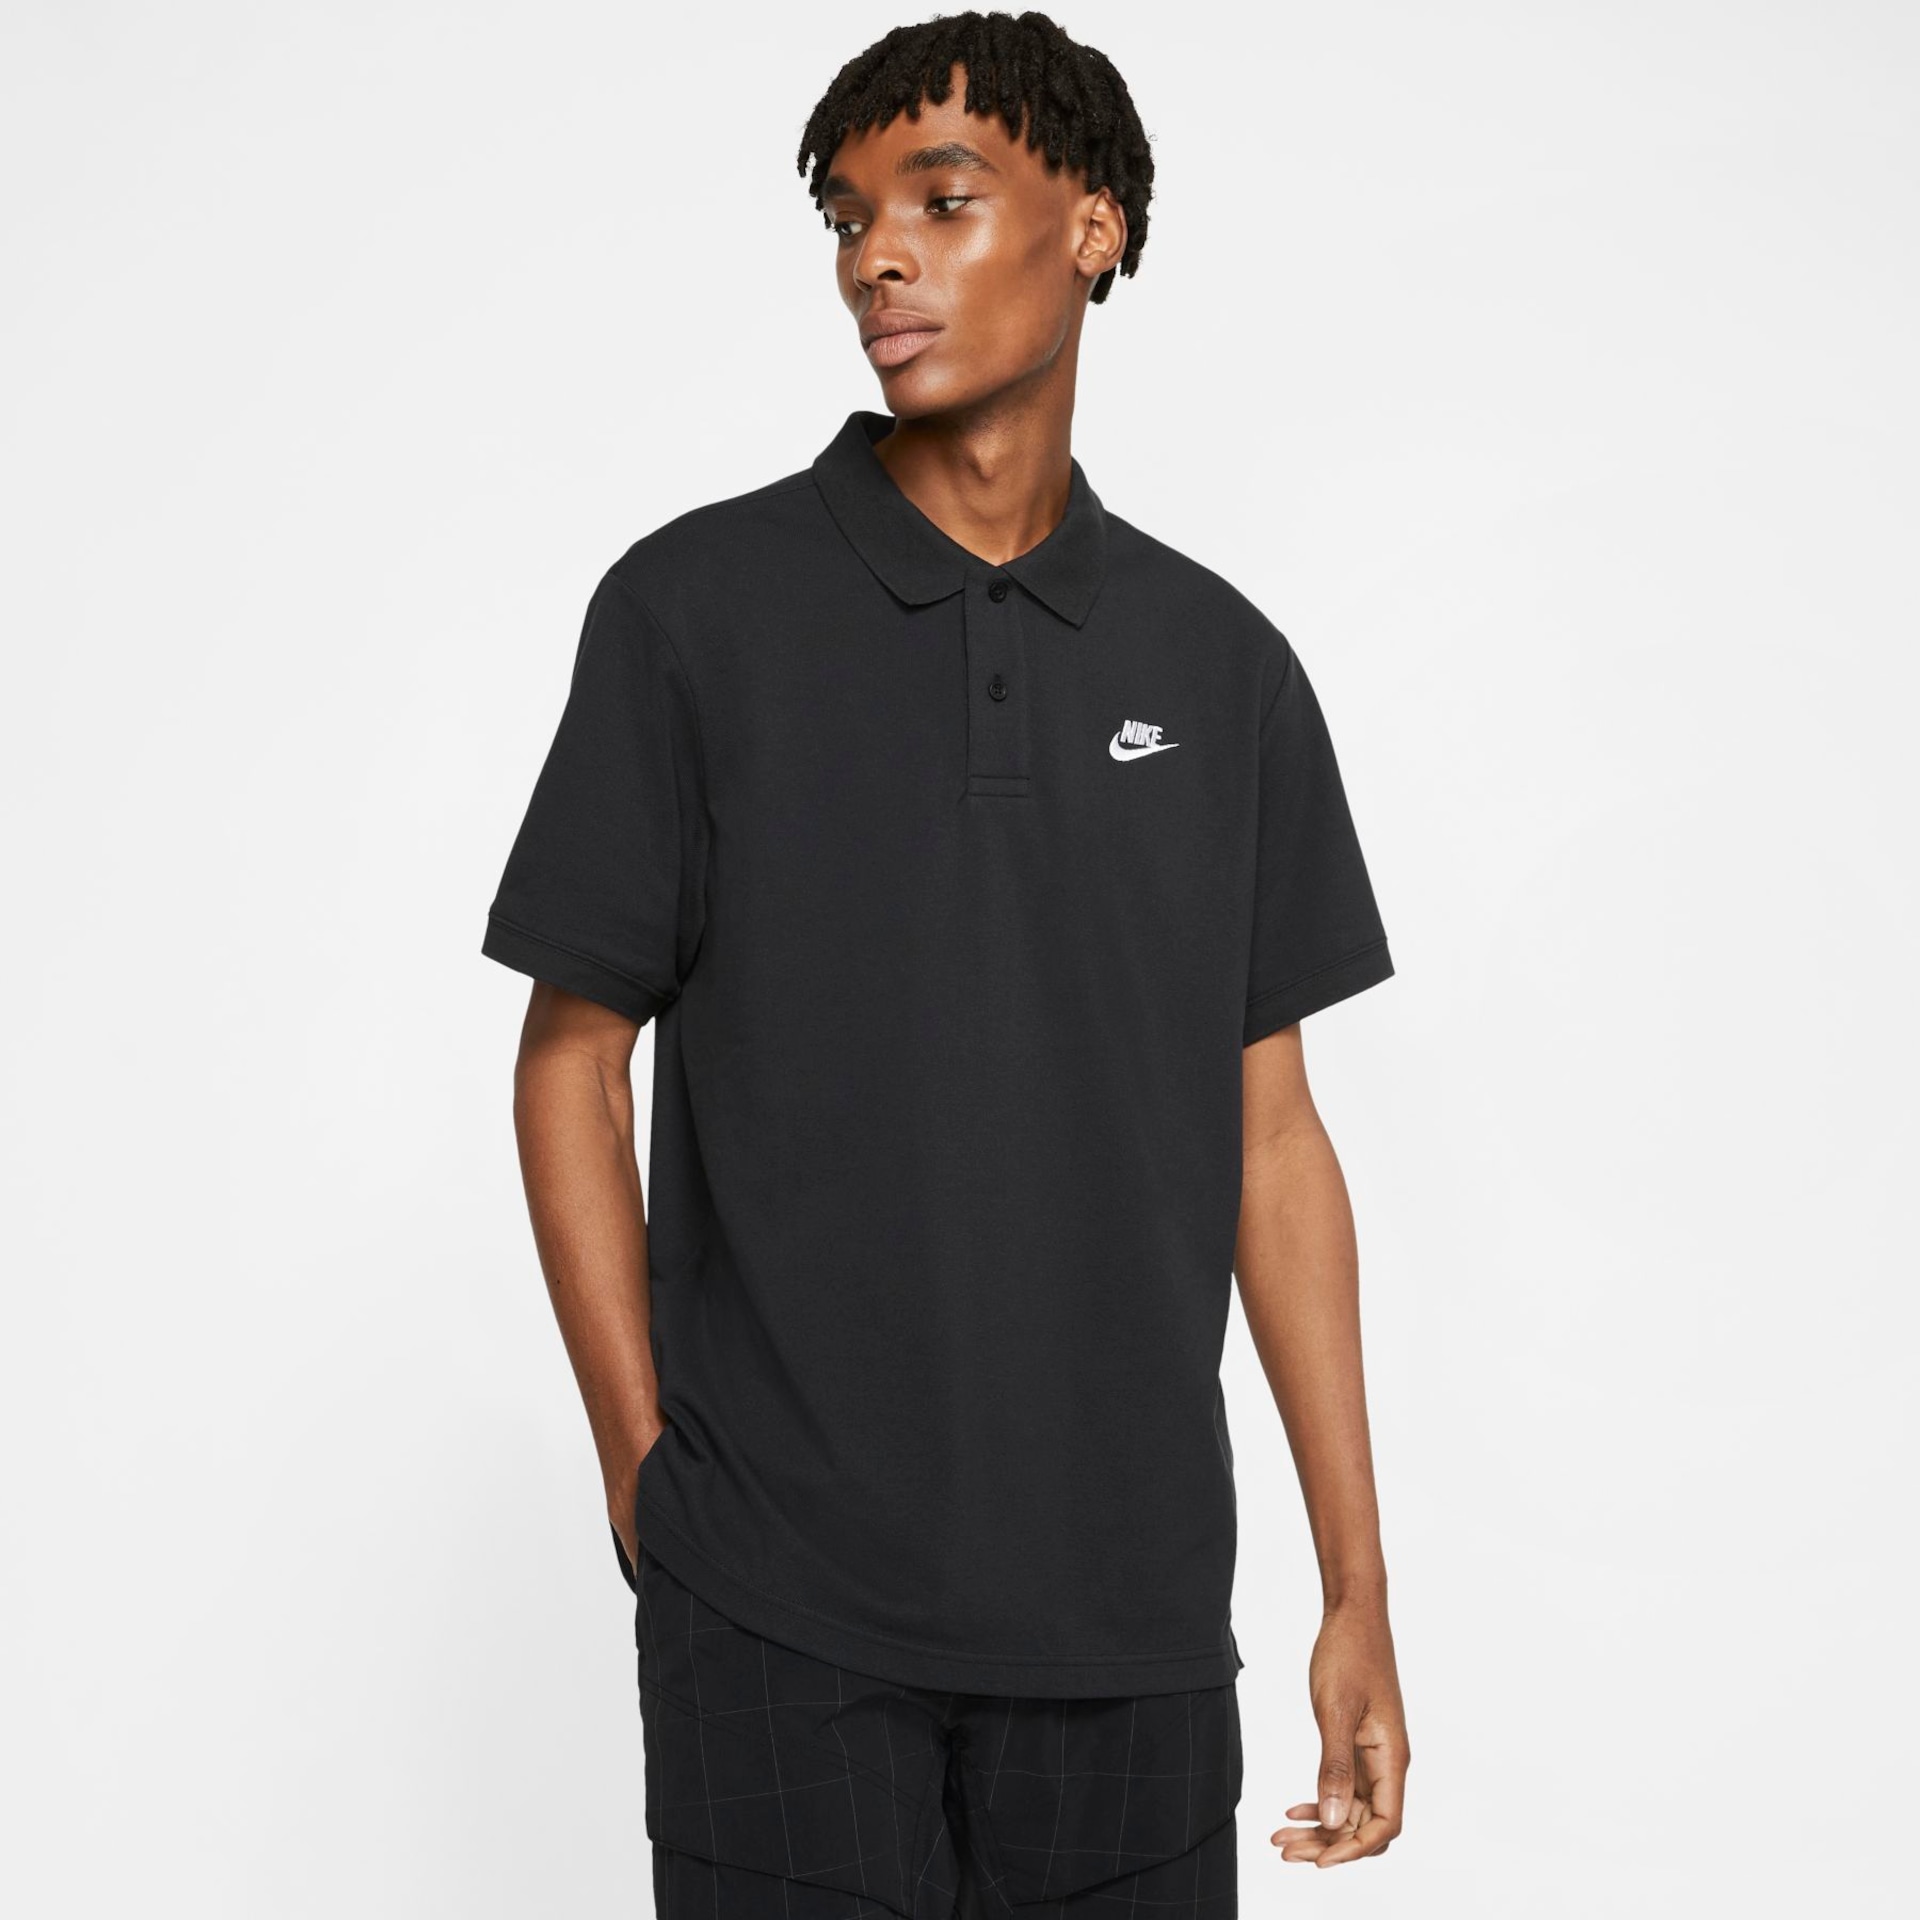 Camiseta Nike Sportswear Polo Masculina - Foto 1